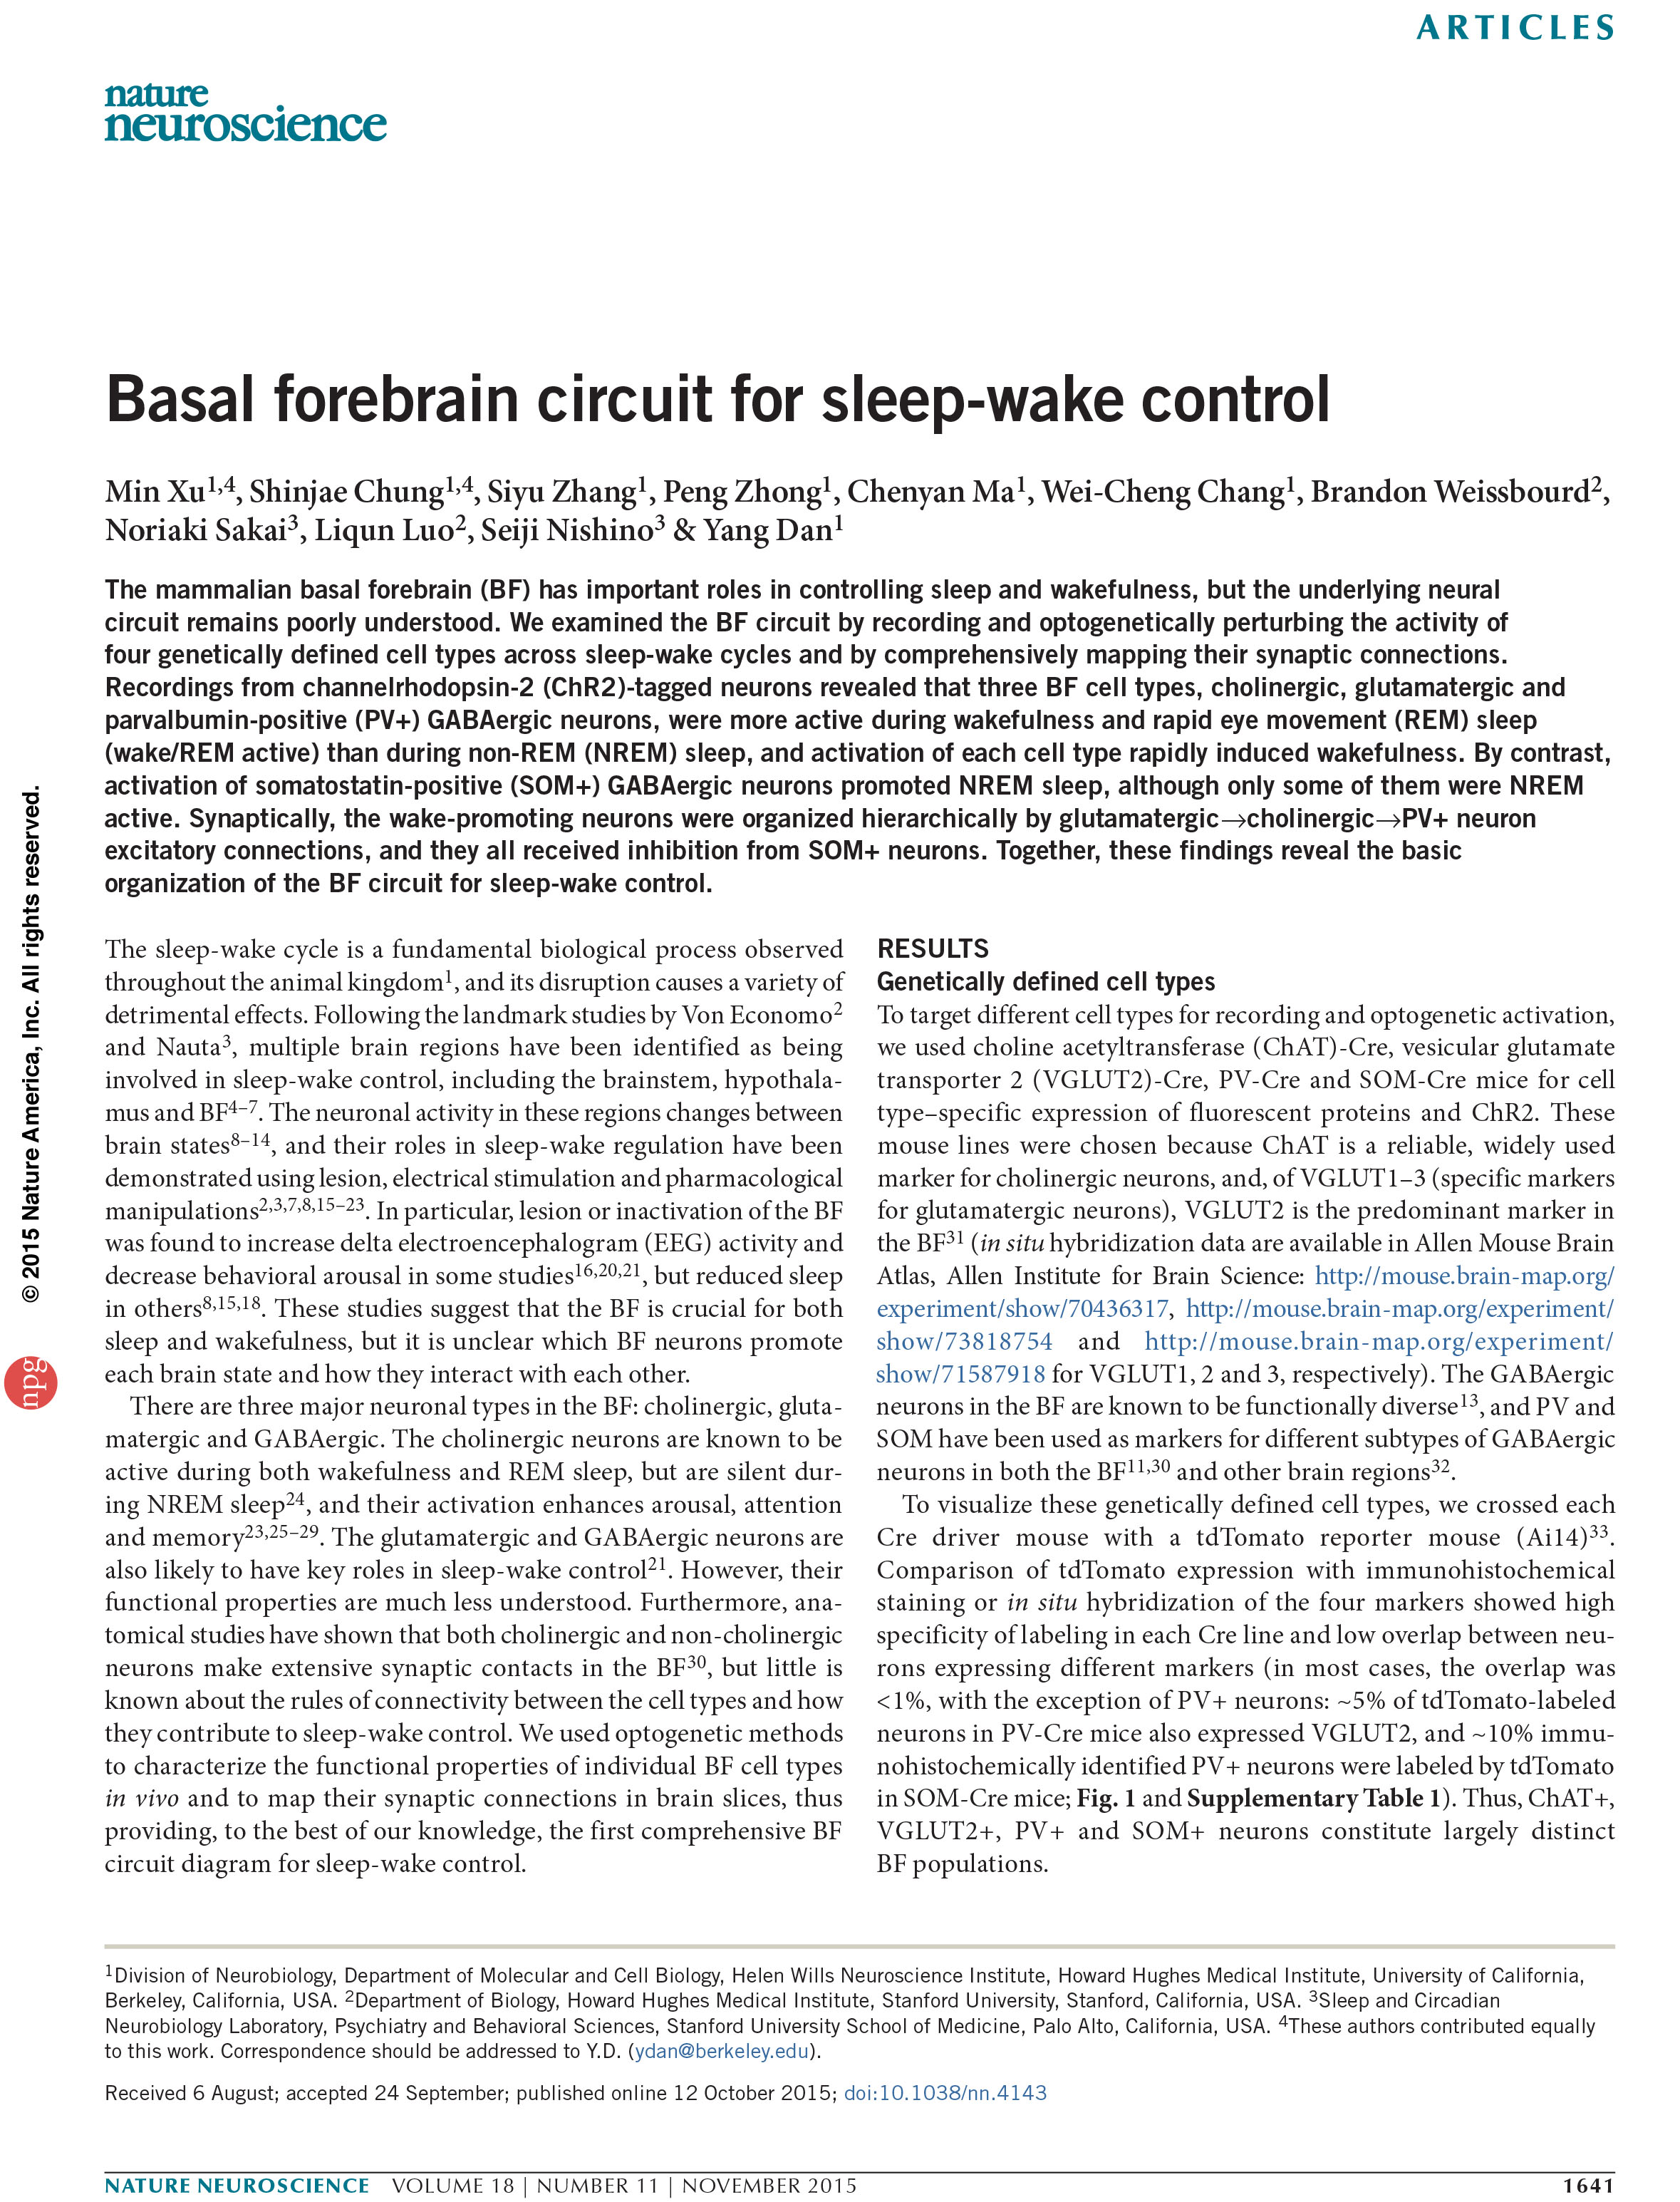 Basal forebrain circuit for sleep-wake control